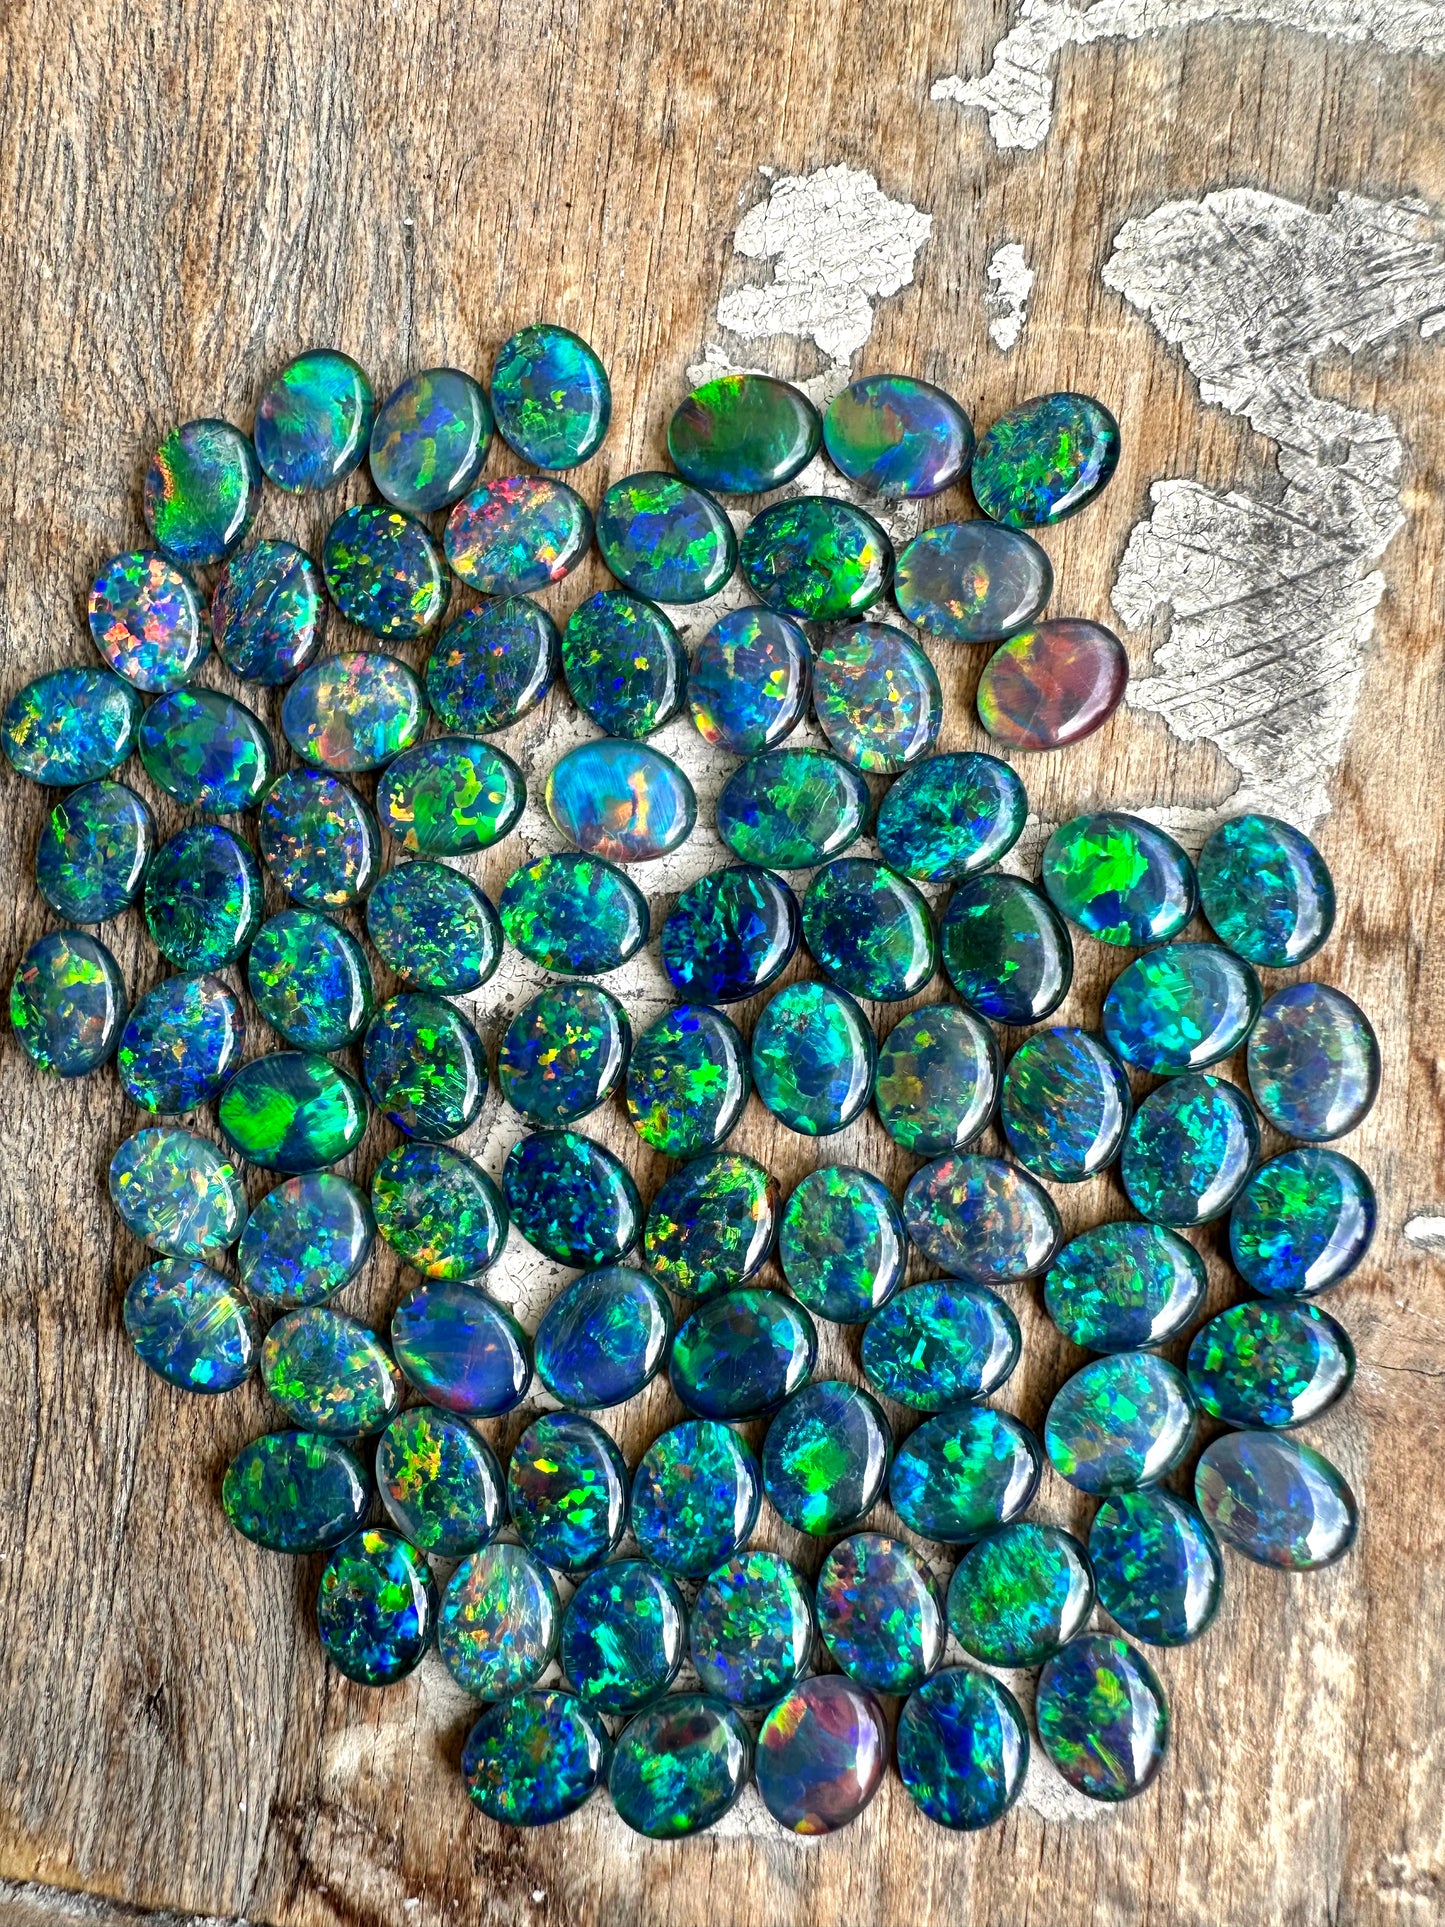 Gem grade opal triplets 10 x 8 mm 